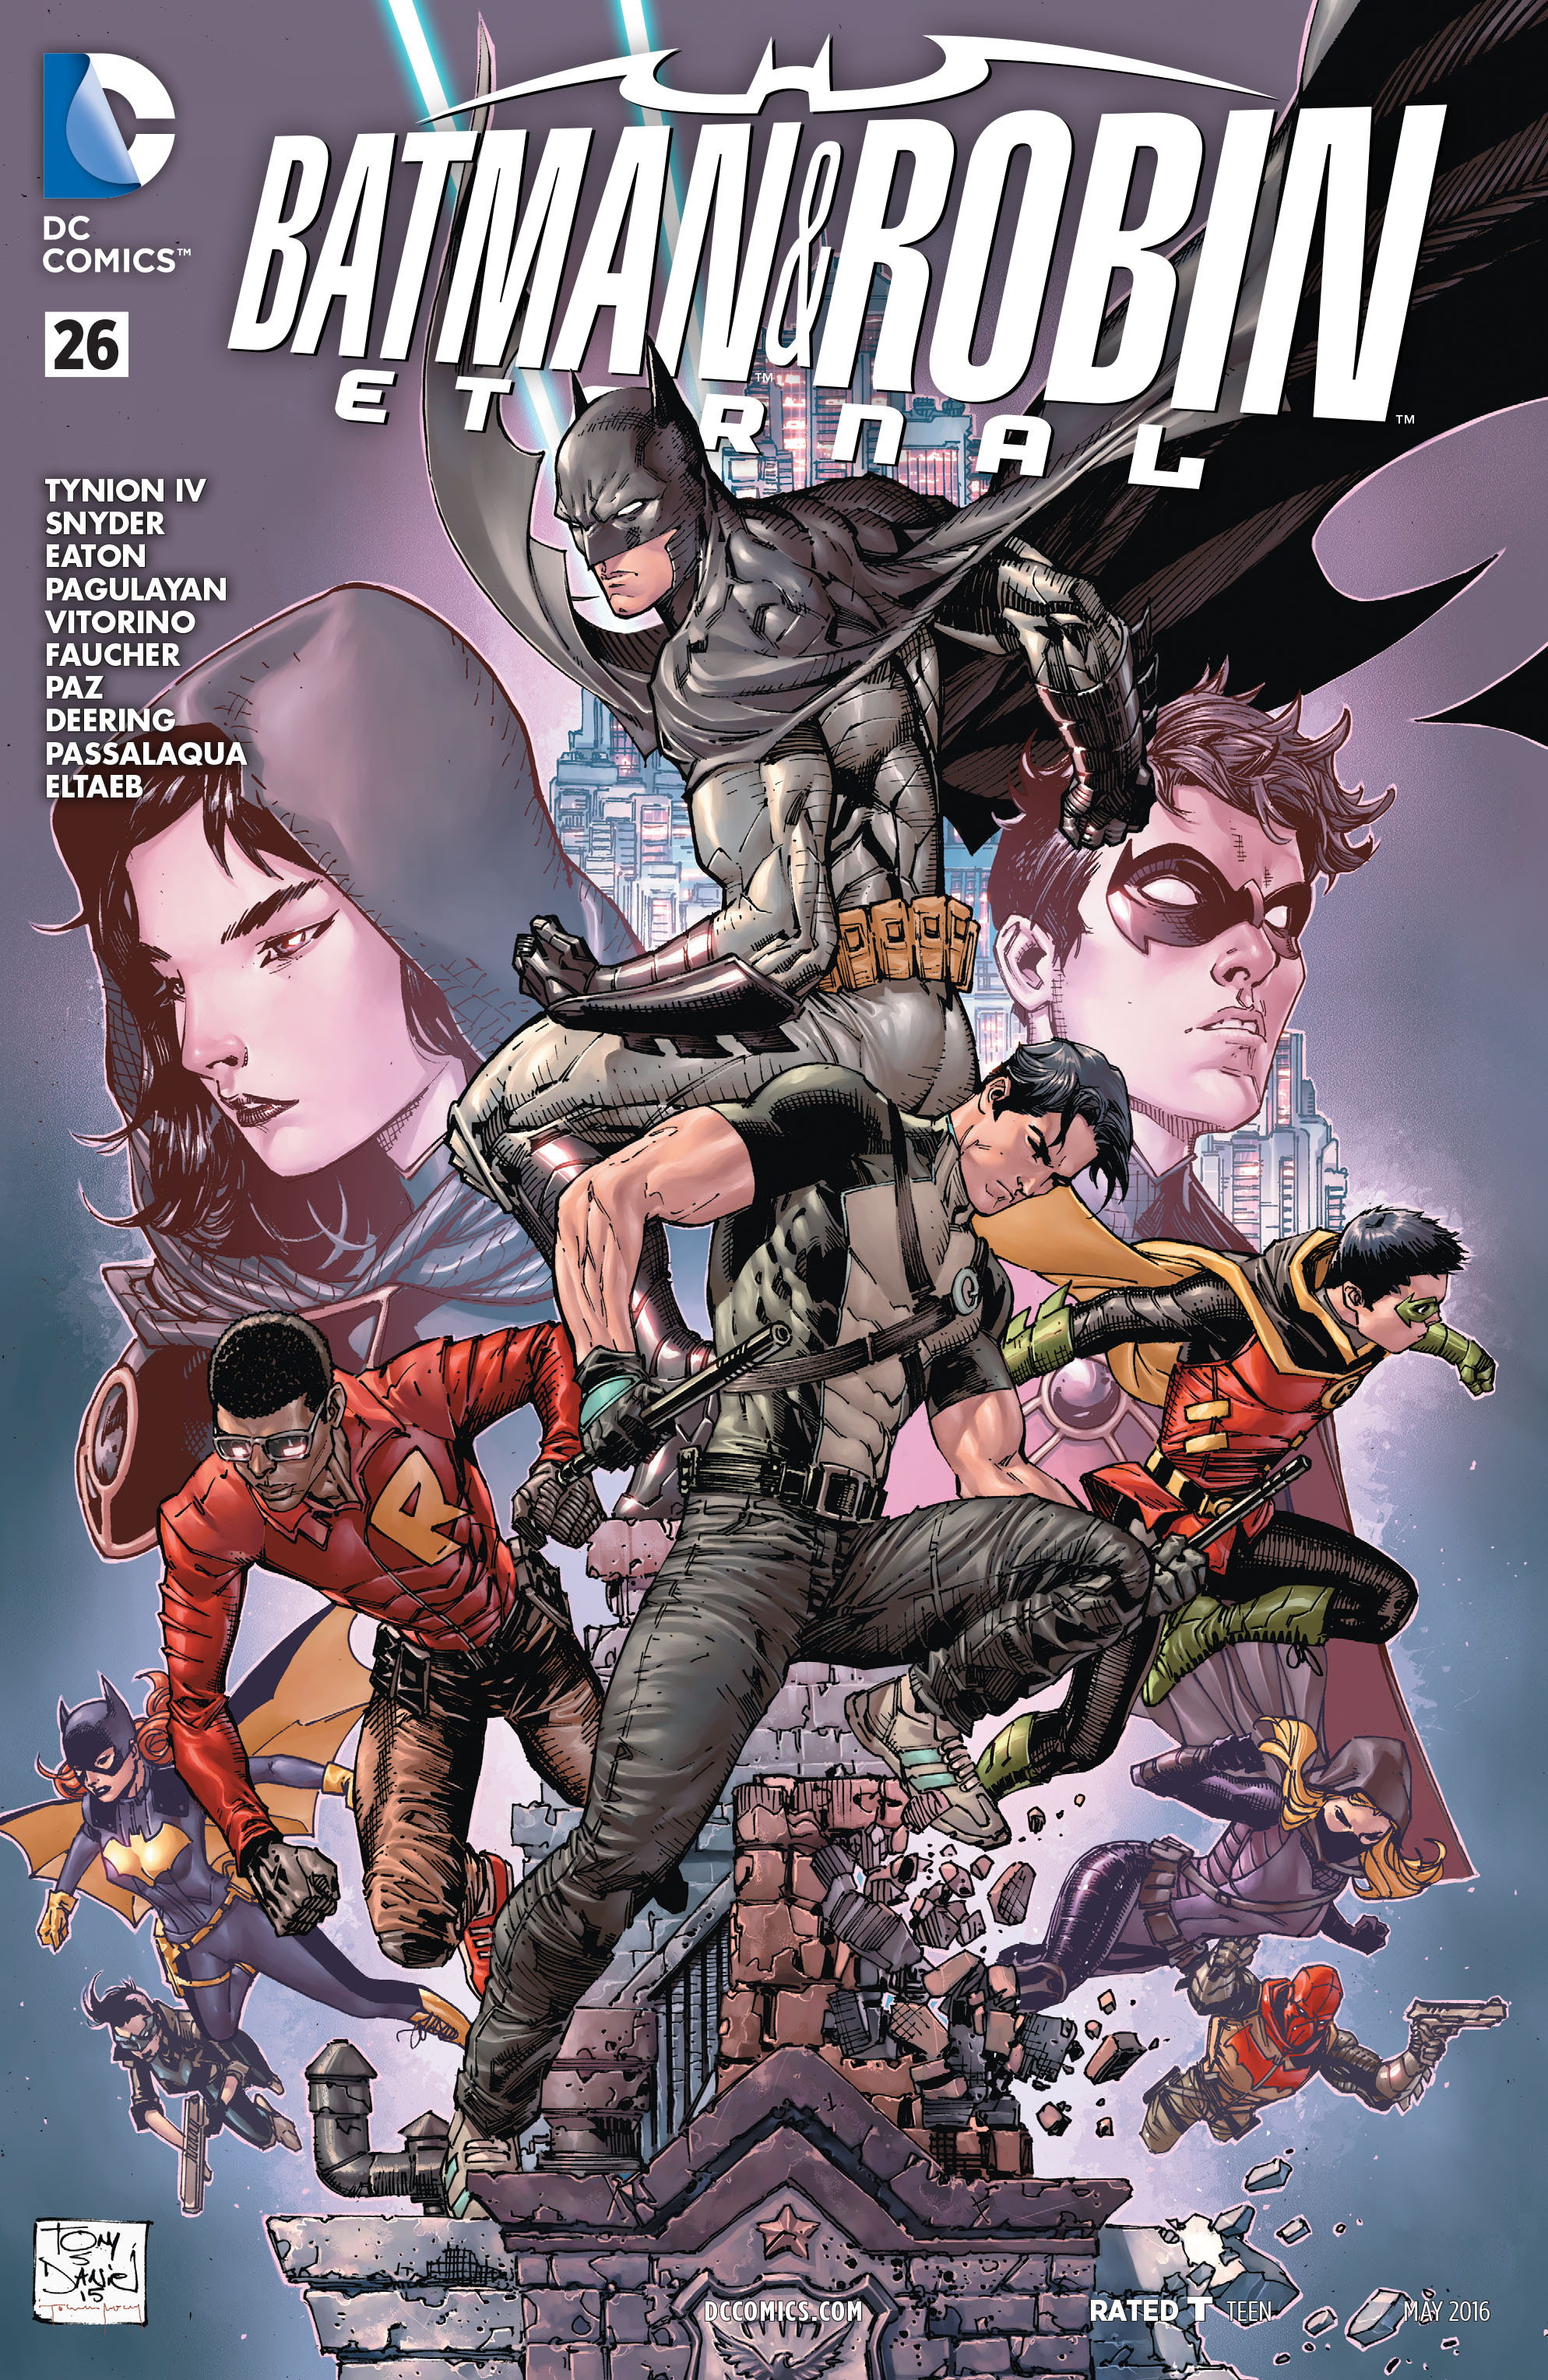 Batman Robin Eternal Issue 26 | Read Batman Robin Eternal Issue 26 comic  online in high quality. Read Full Comic online for free - Read comics online  in high quality .|